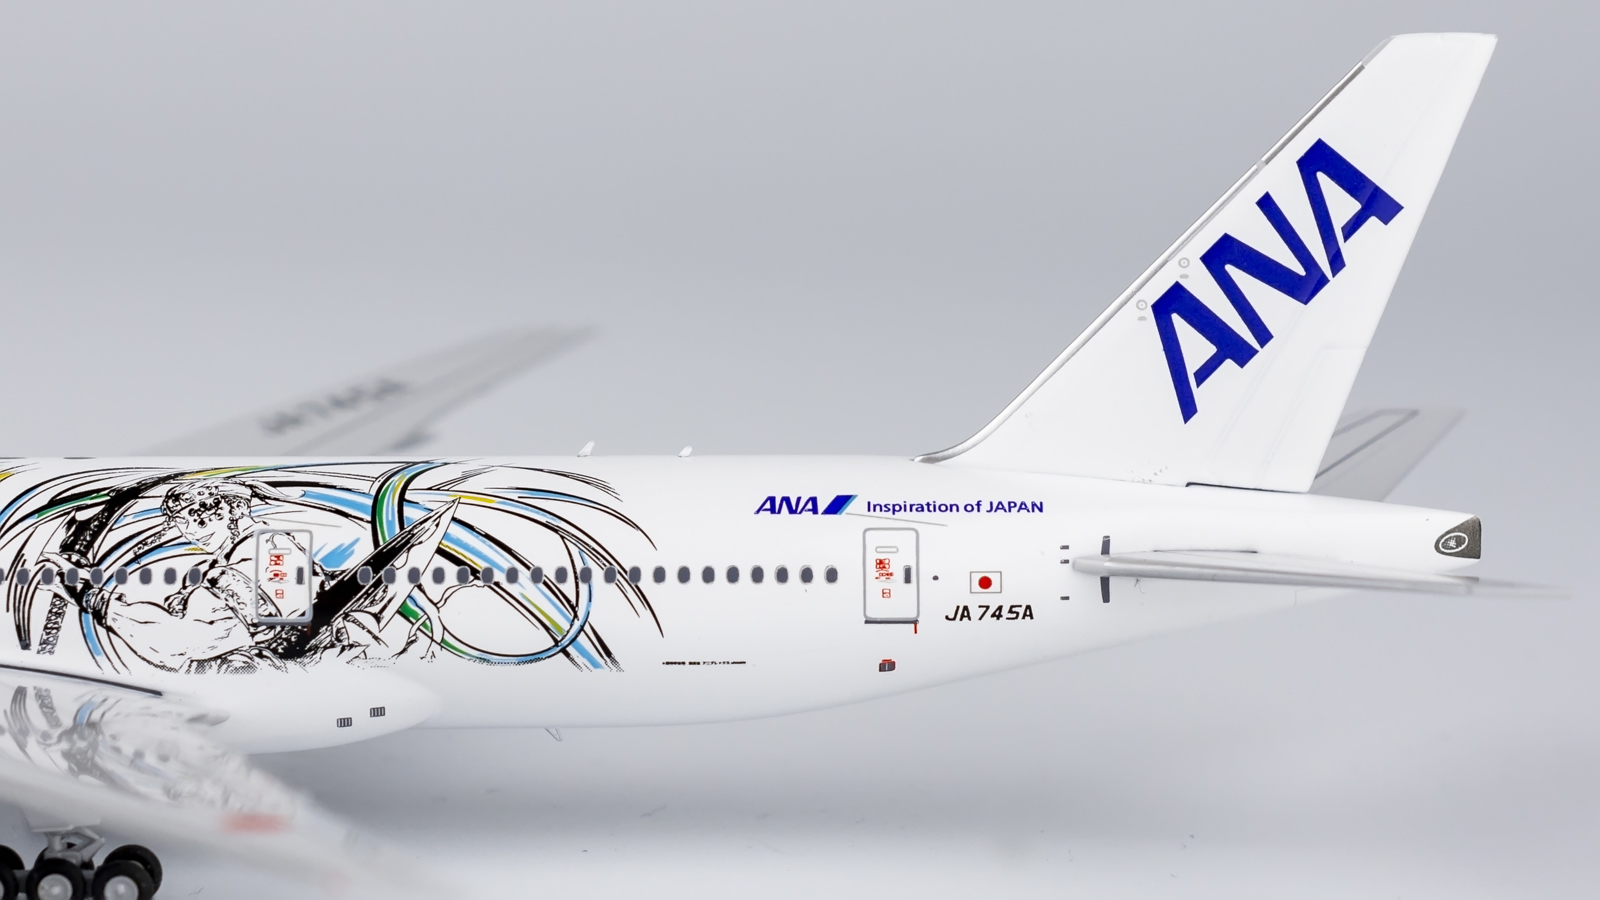 NG Models 1:400 ANA All Nippon Airways JA745A Boeing 777-200 